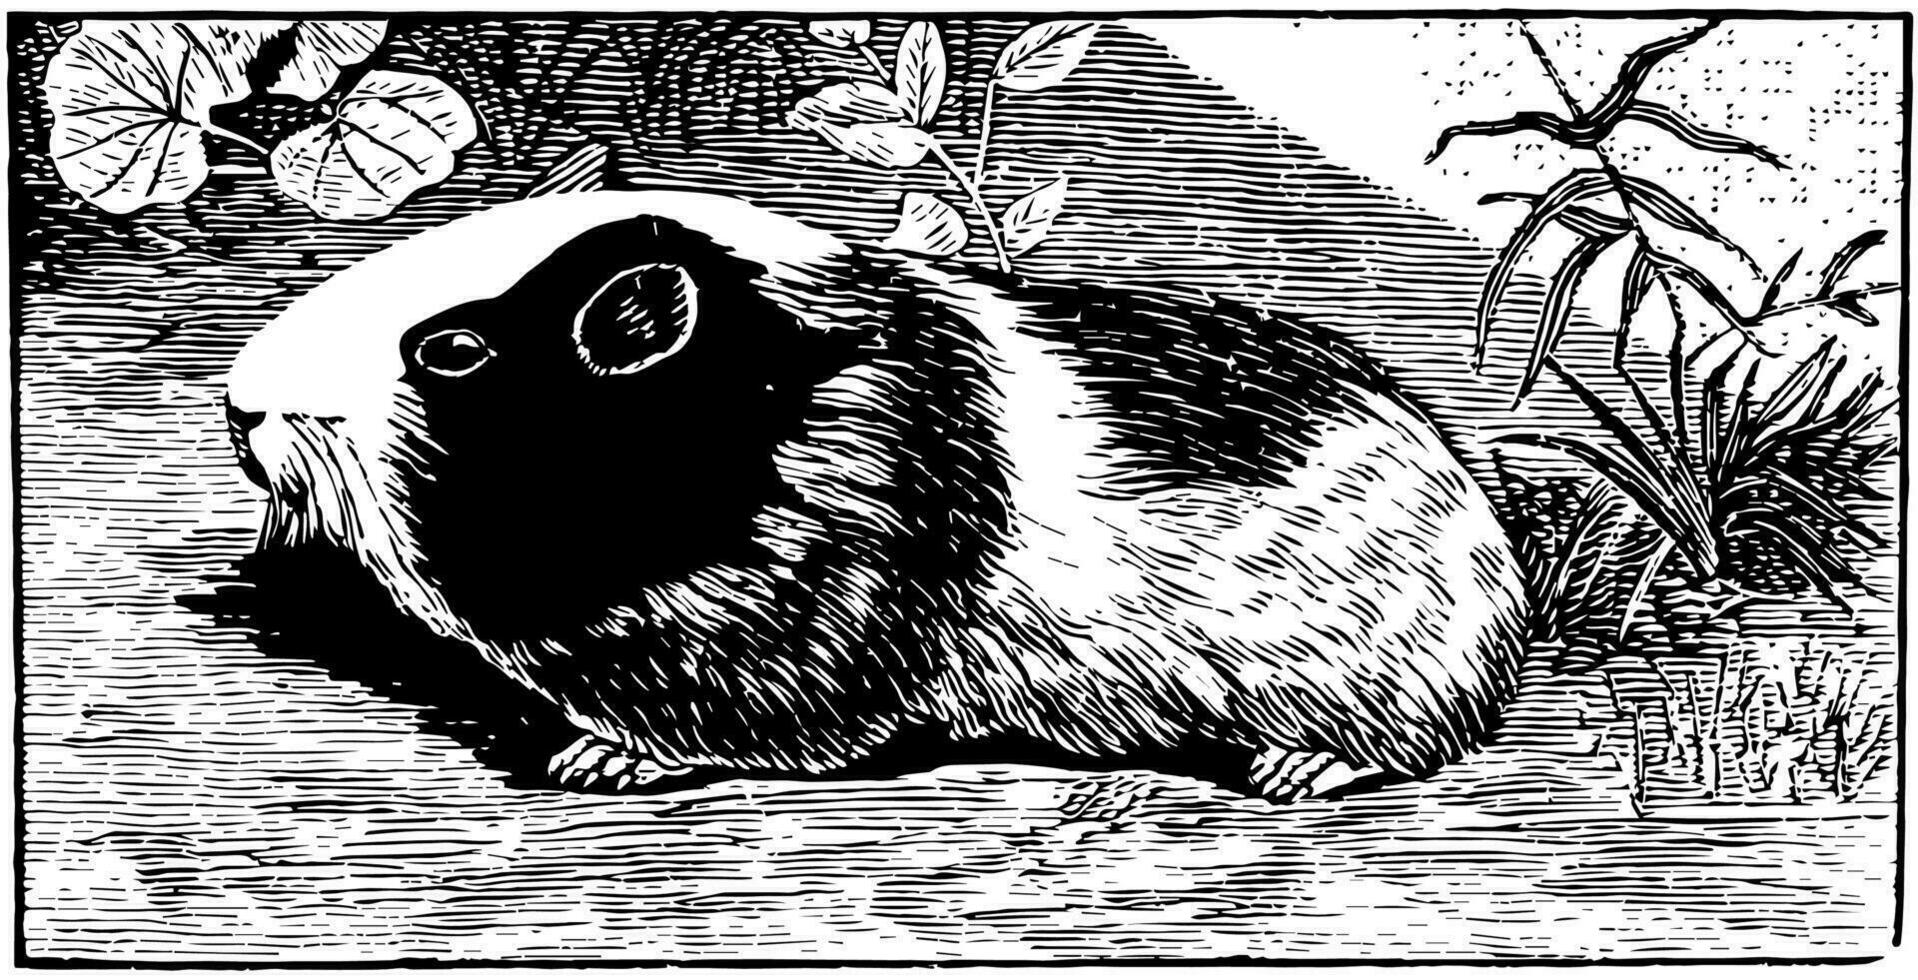 Guinea cerdo, Clásico ilustración. vector